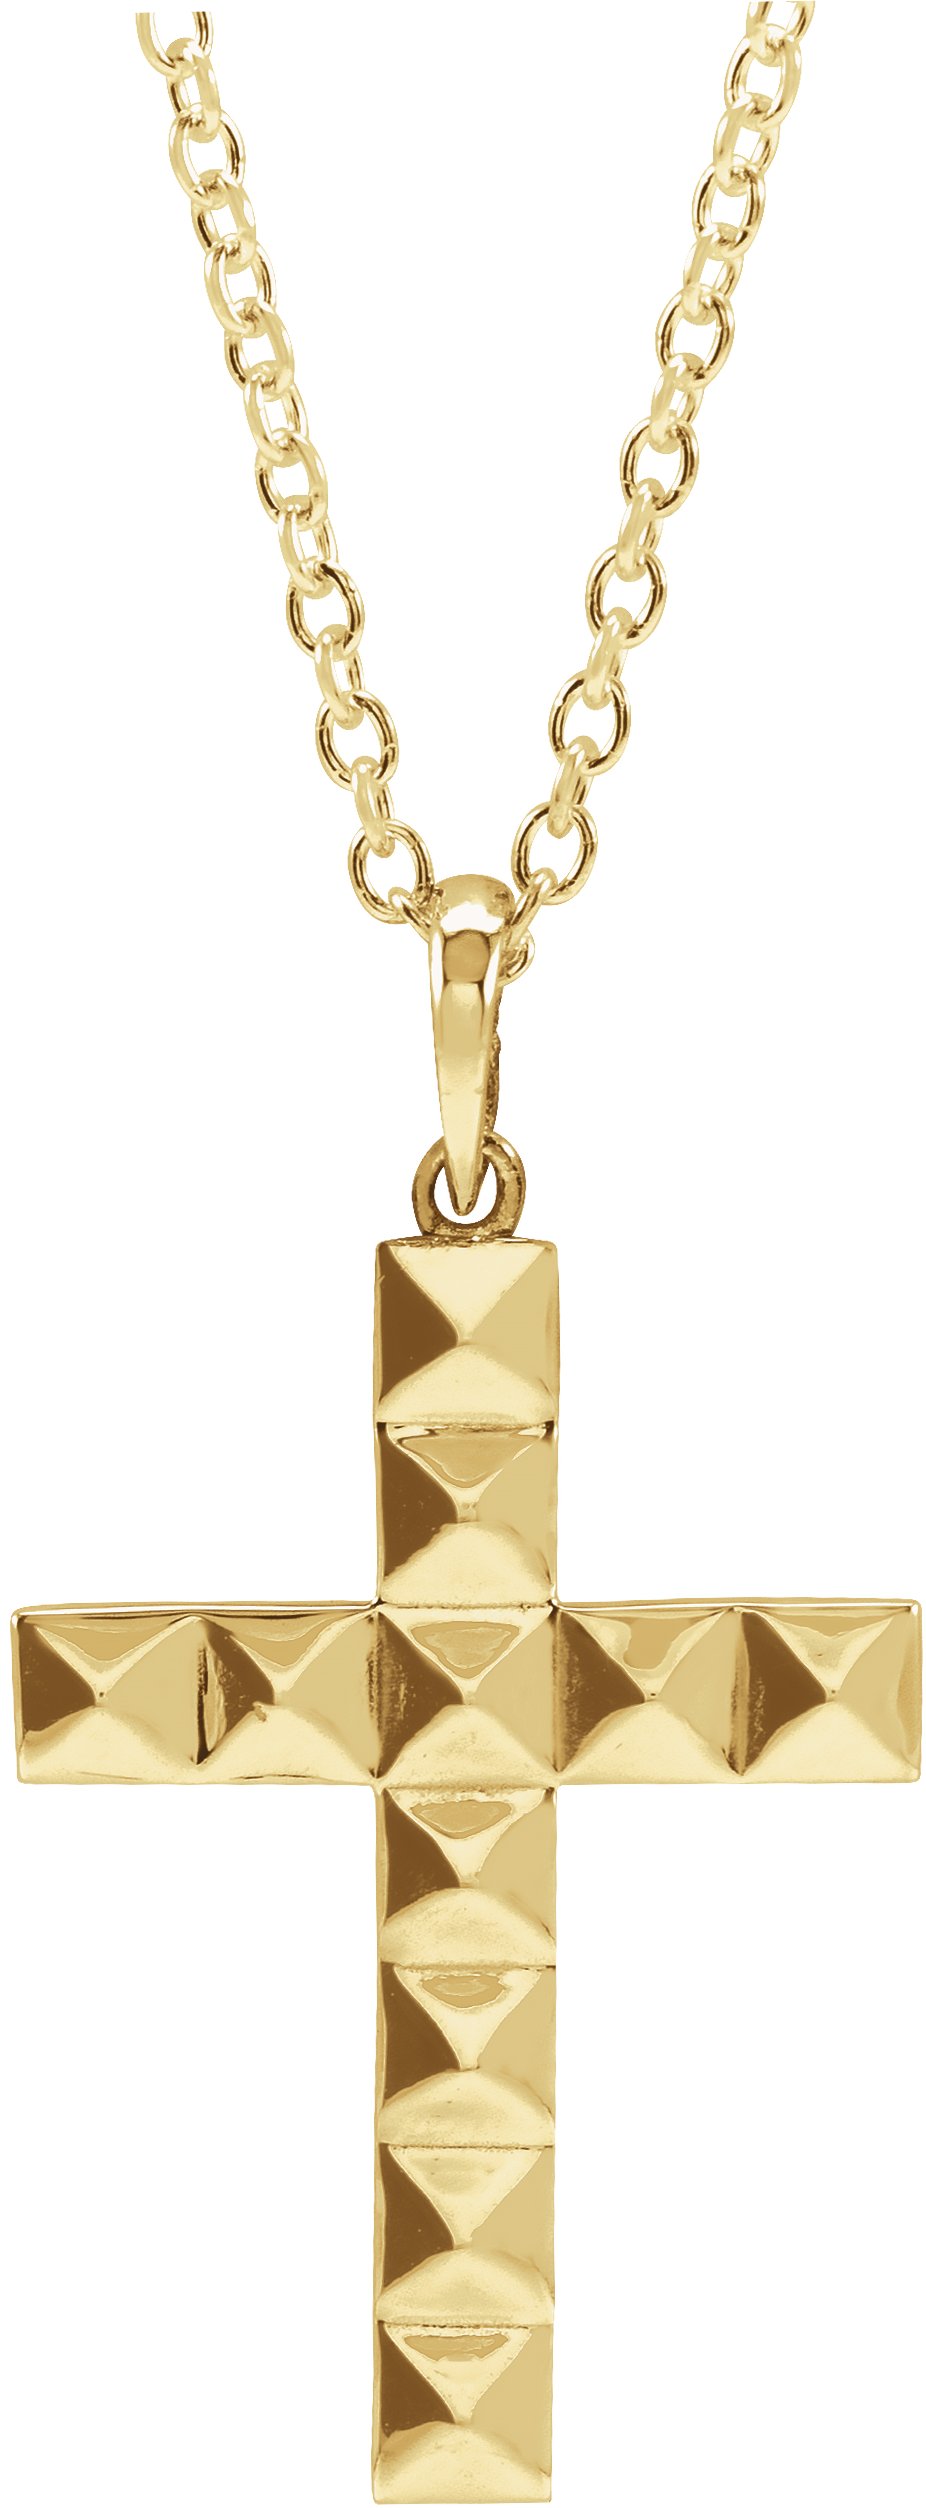 14K Yellow 27.22x14.29 mm Pyramid Cross 20" Necklace